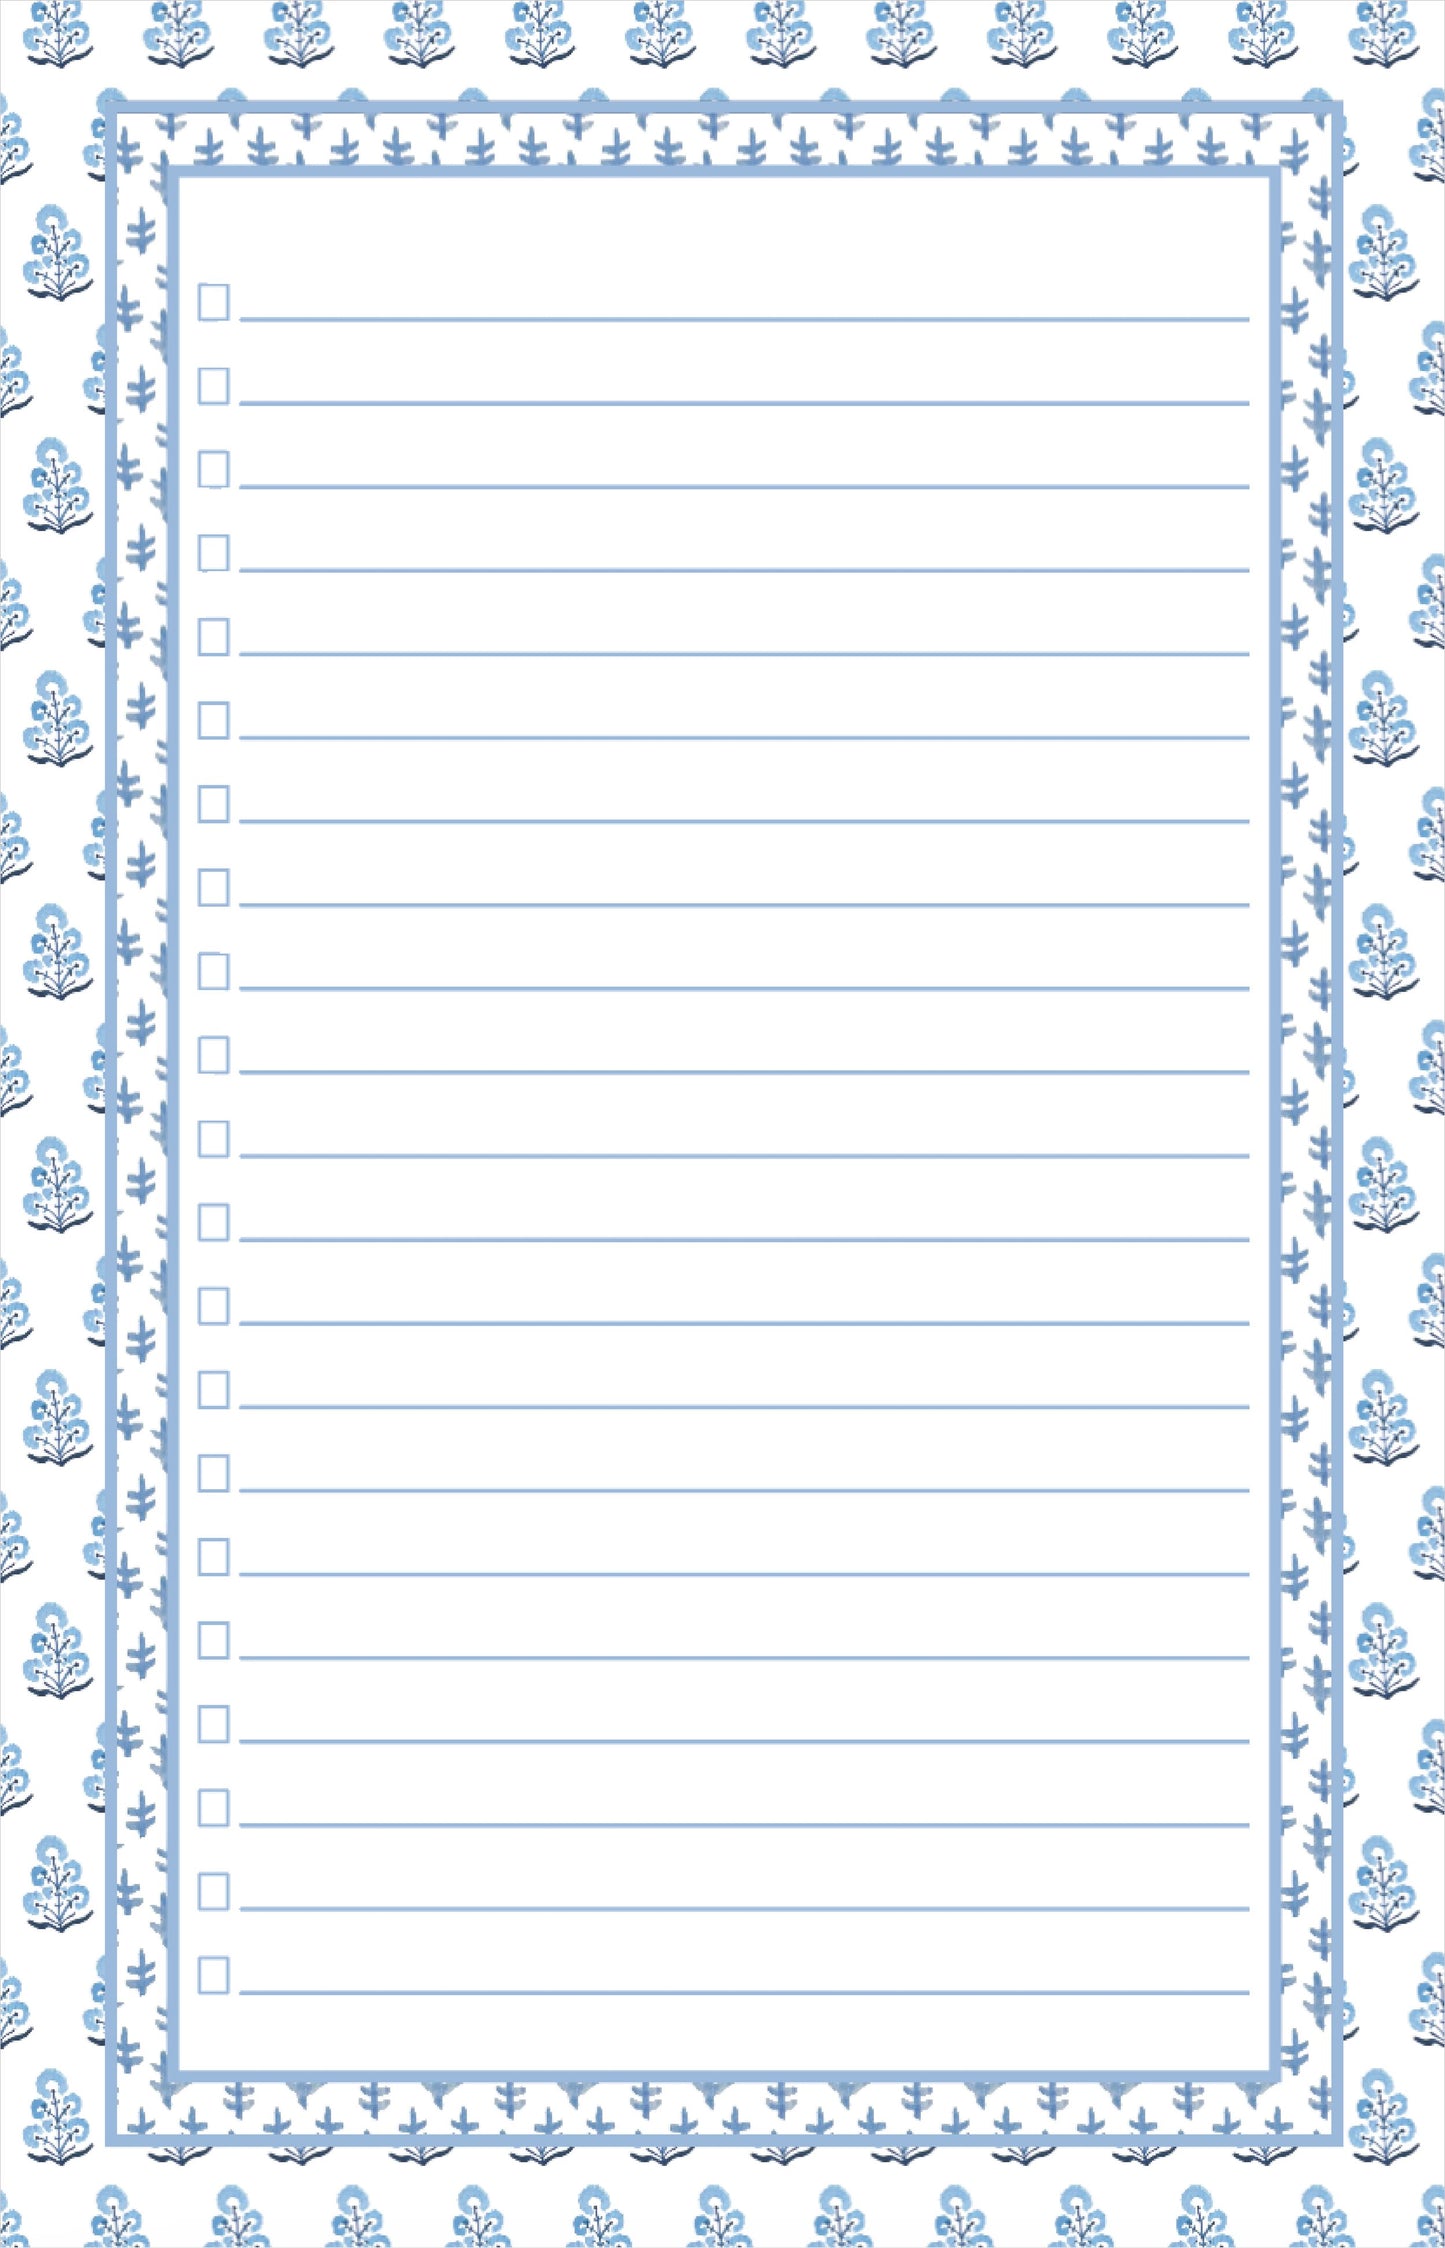 Double Print Light Blues Checklist Notepad